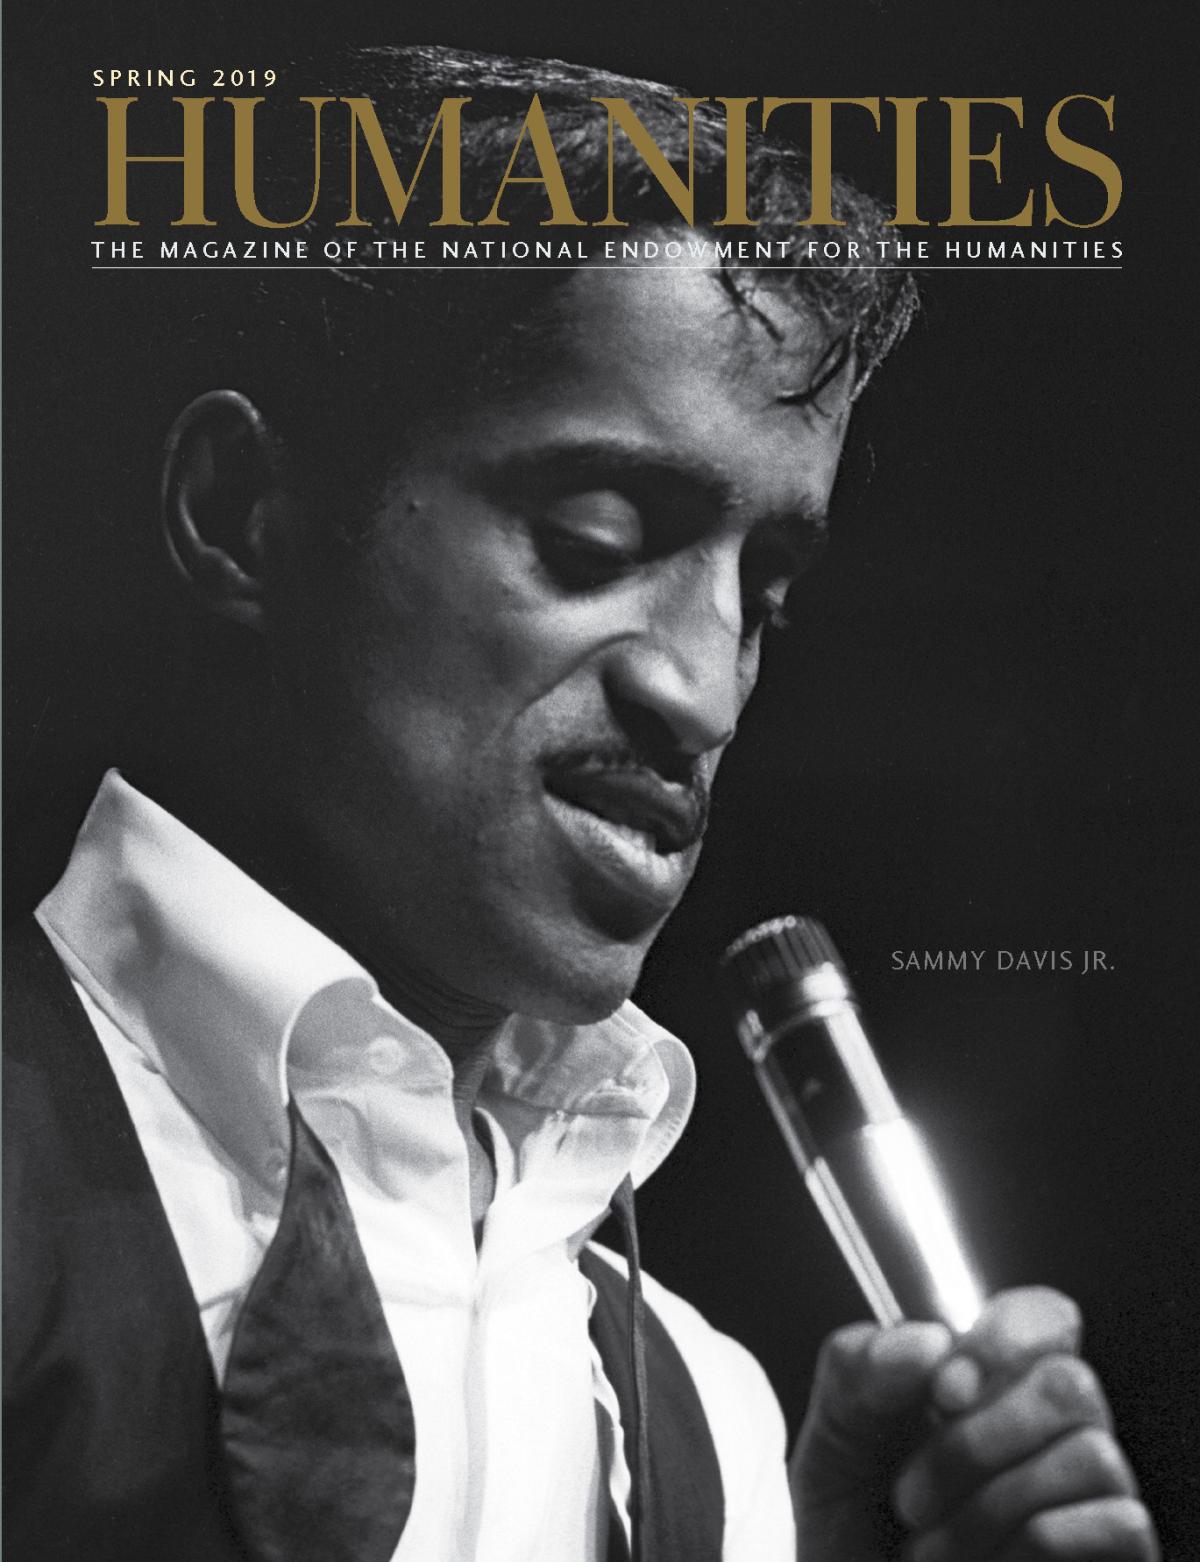 Sammy Davis Jr. on the cover of Humanities magazine 